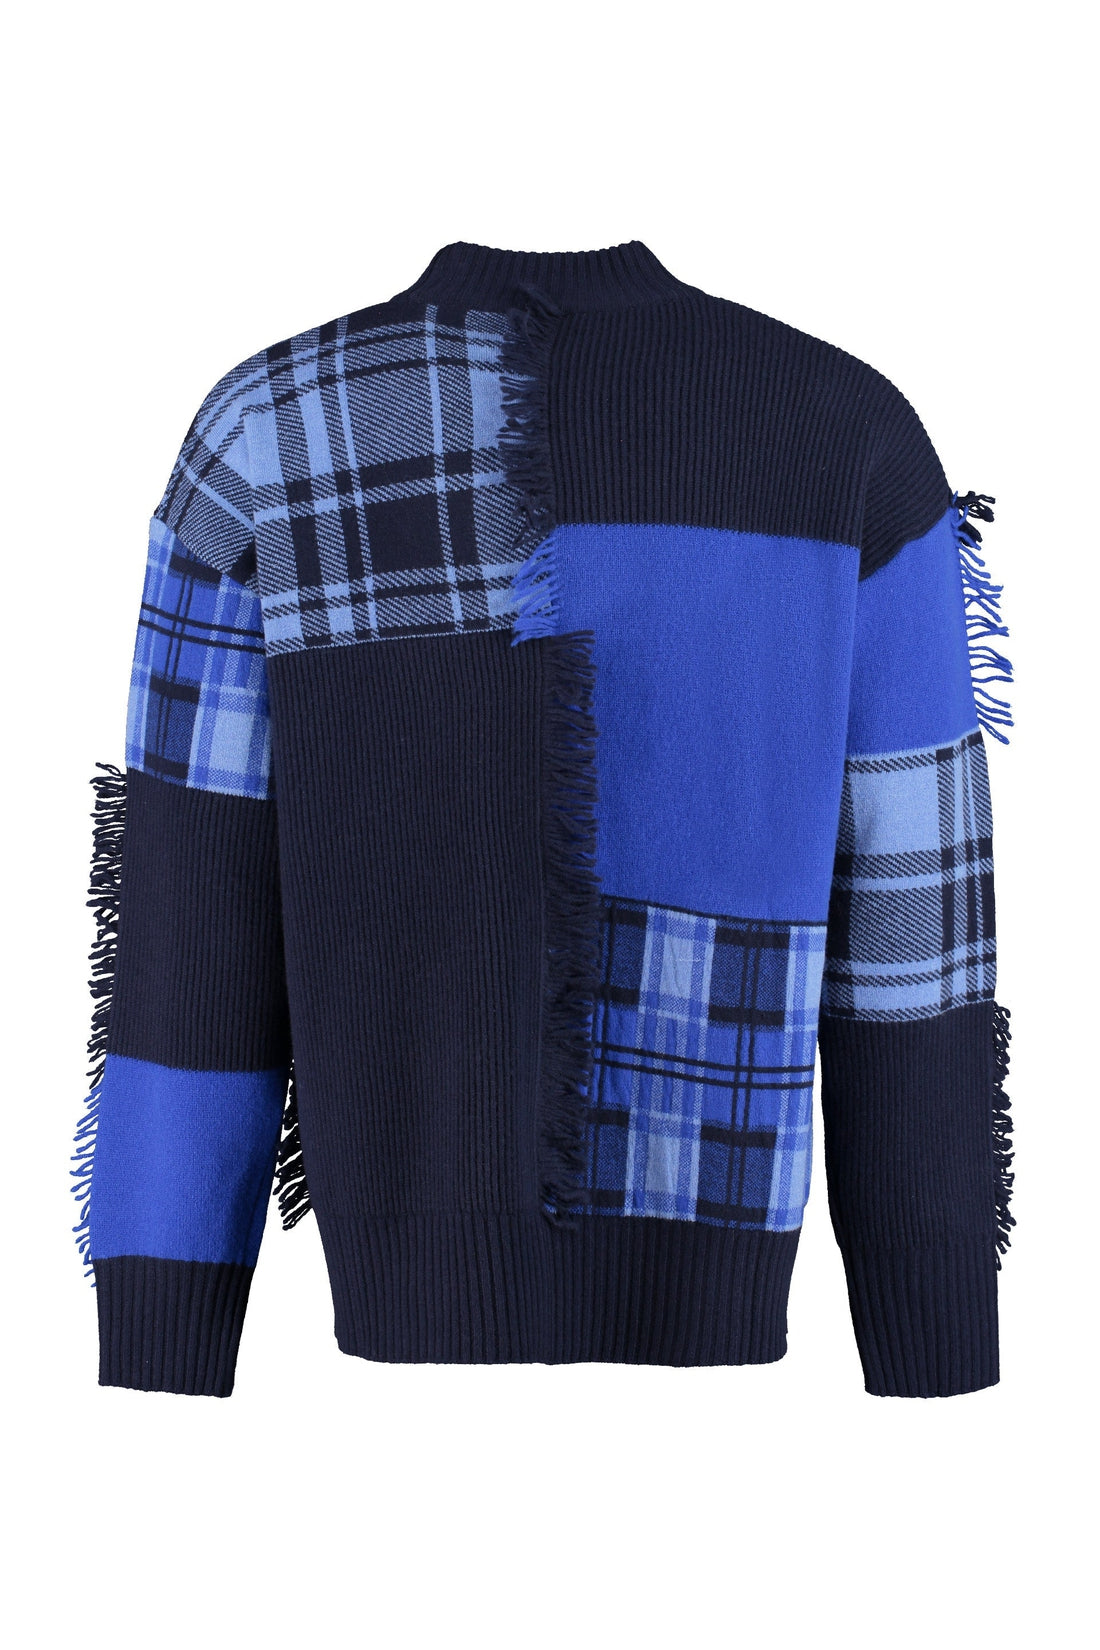 Versace-OUTLET-SALE-Long sleeve crew-neck sweater-ARCHIVIST